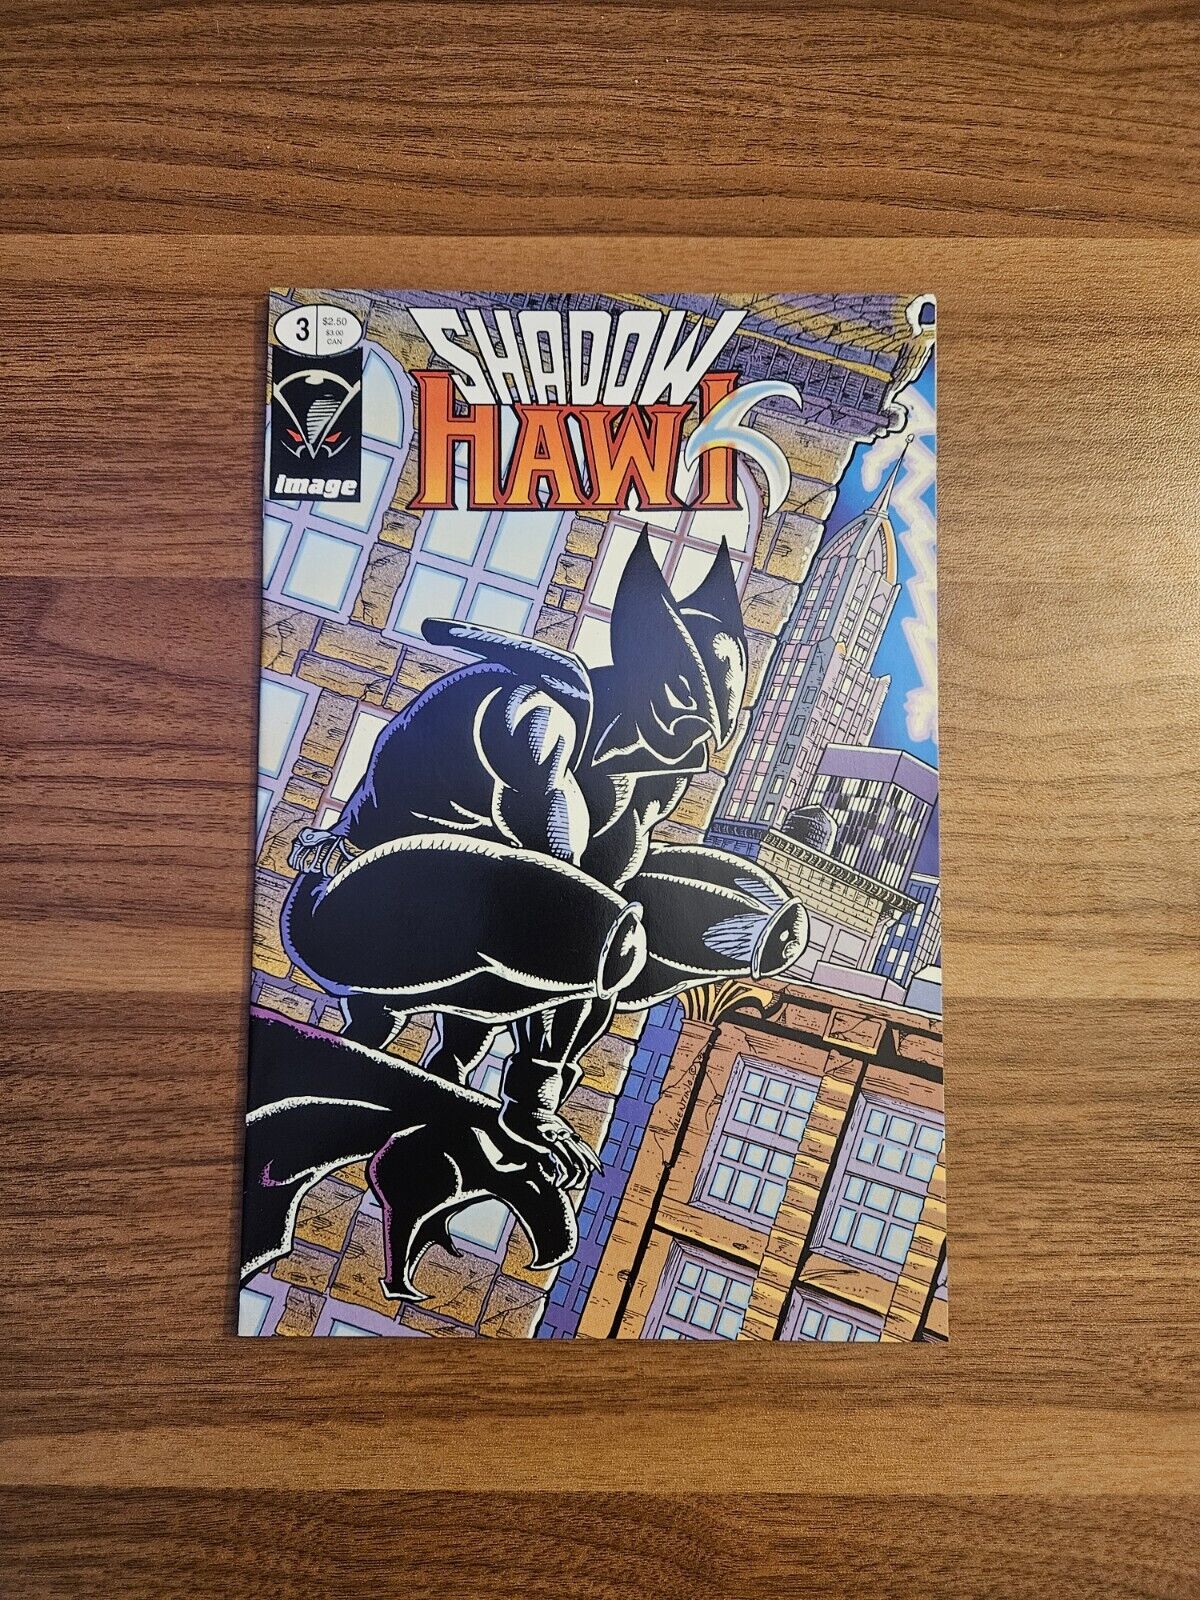 Shadowhawk #3 (Image Comics, December 1992)